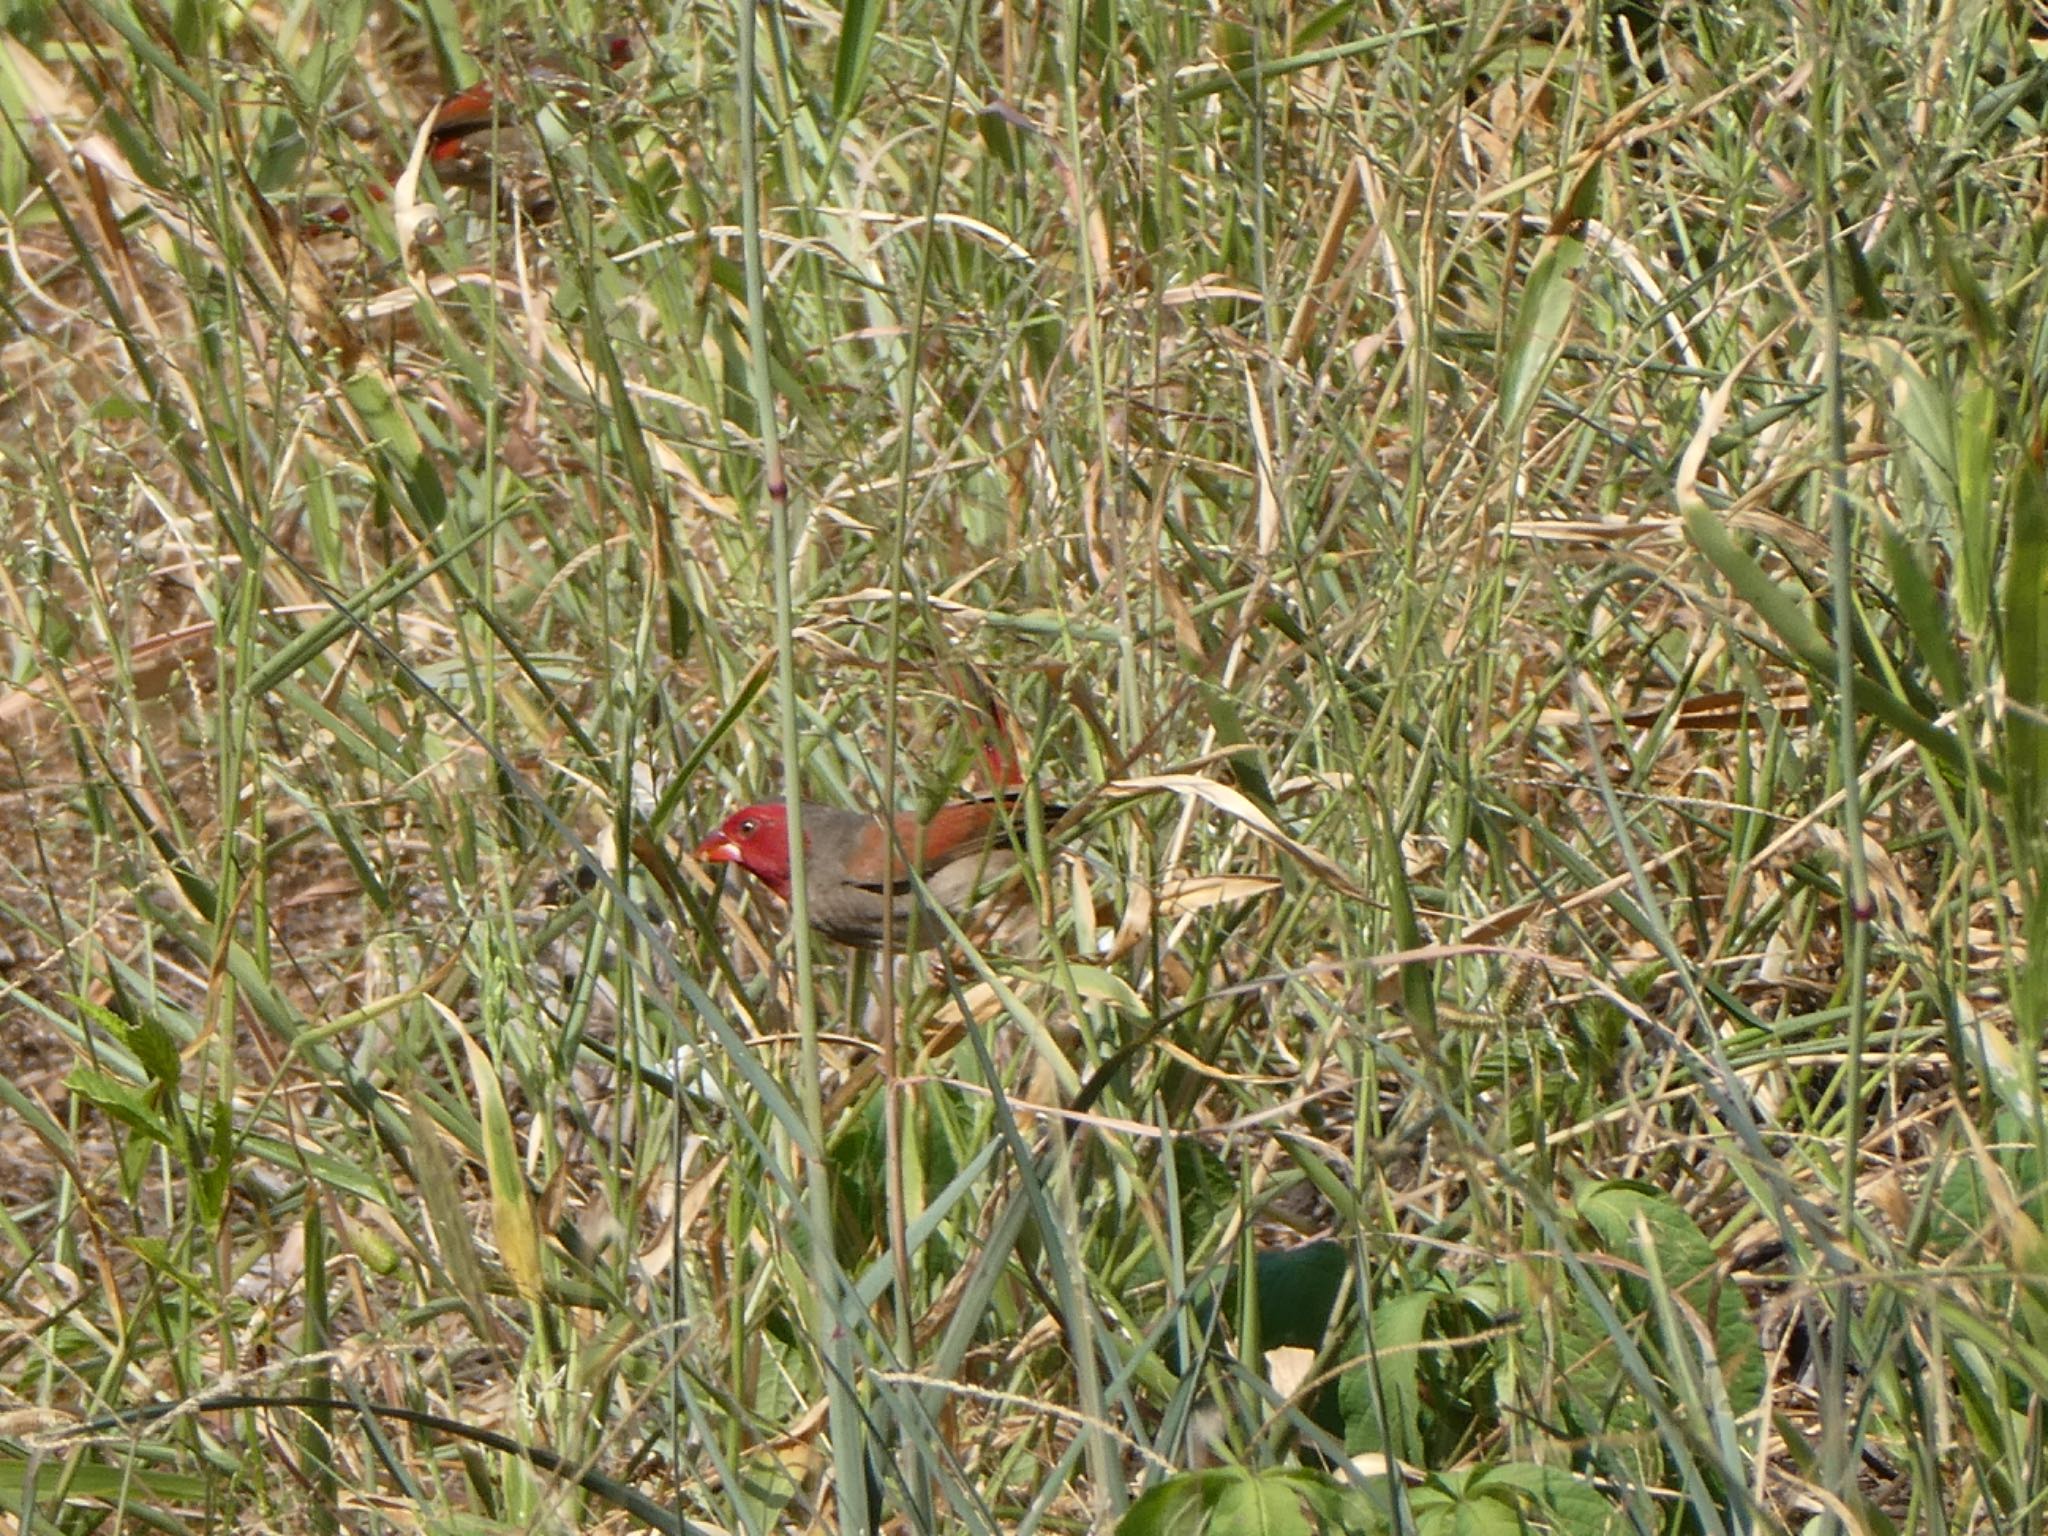 Photo of Crimson Finch at Casuarina Coastal Reserve by Maki